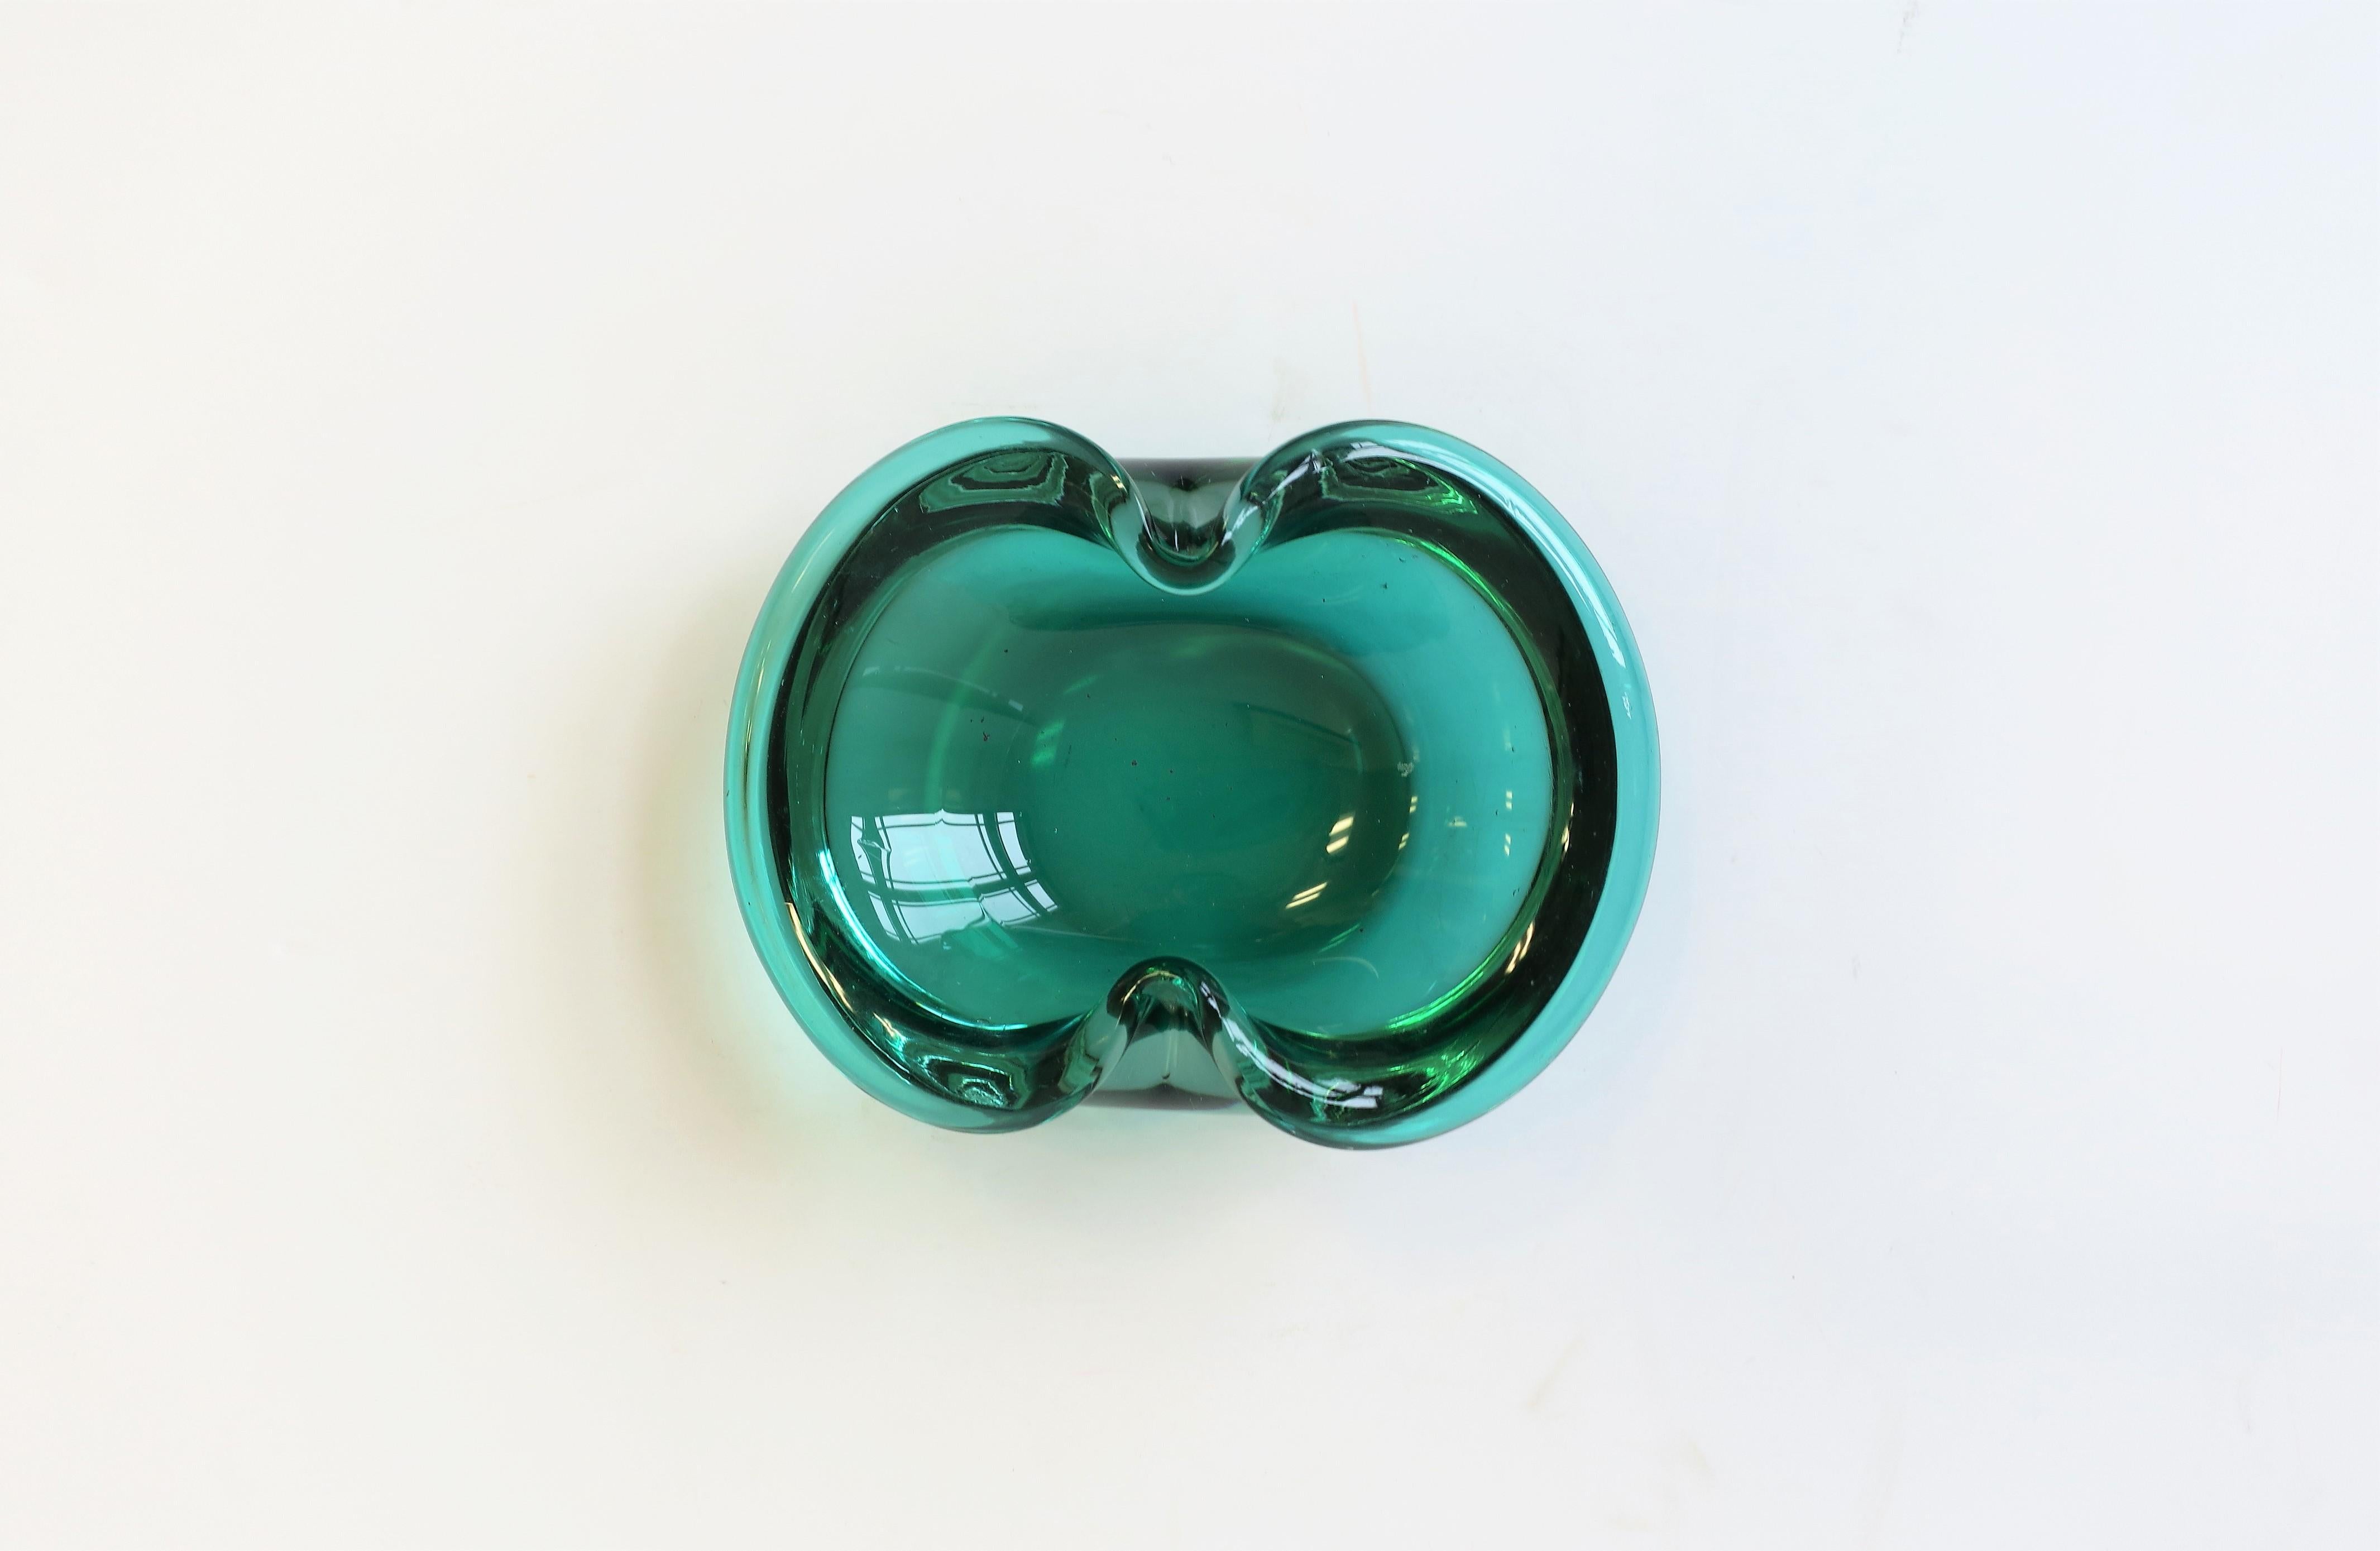 A beautiful European emerald green art glass bowl or ashtray, circa mid-20th century, Europe. 

Measures: 4